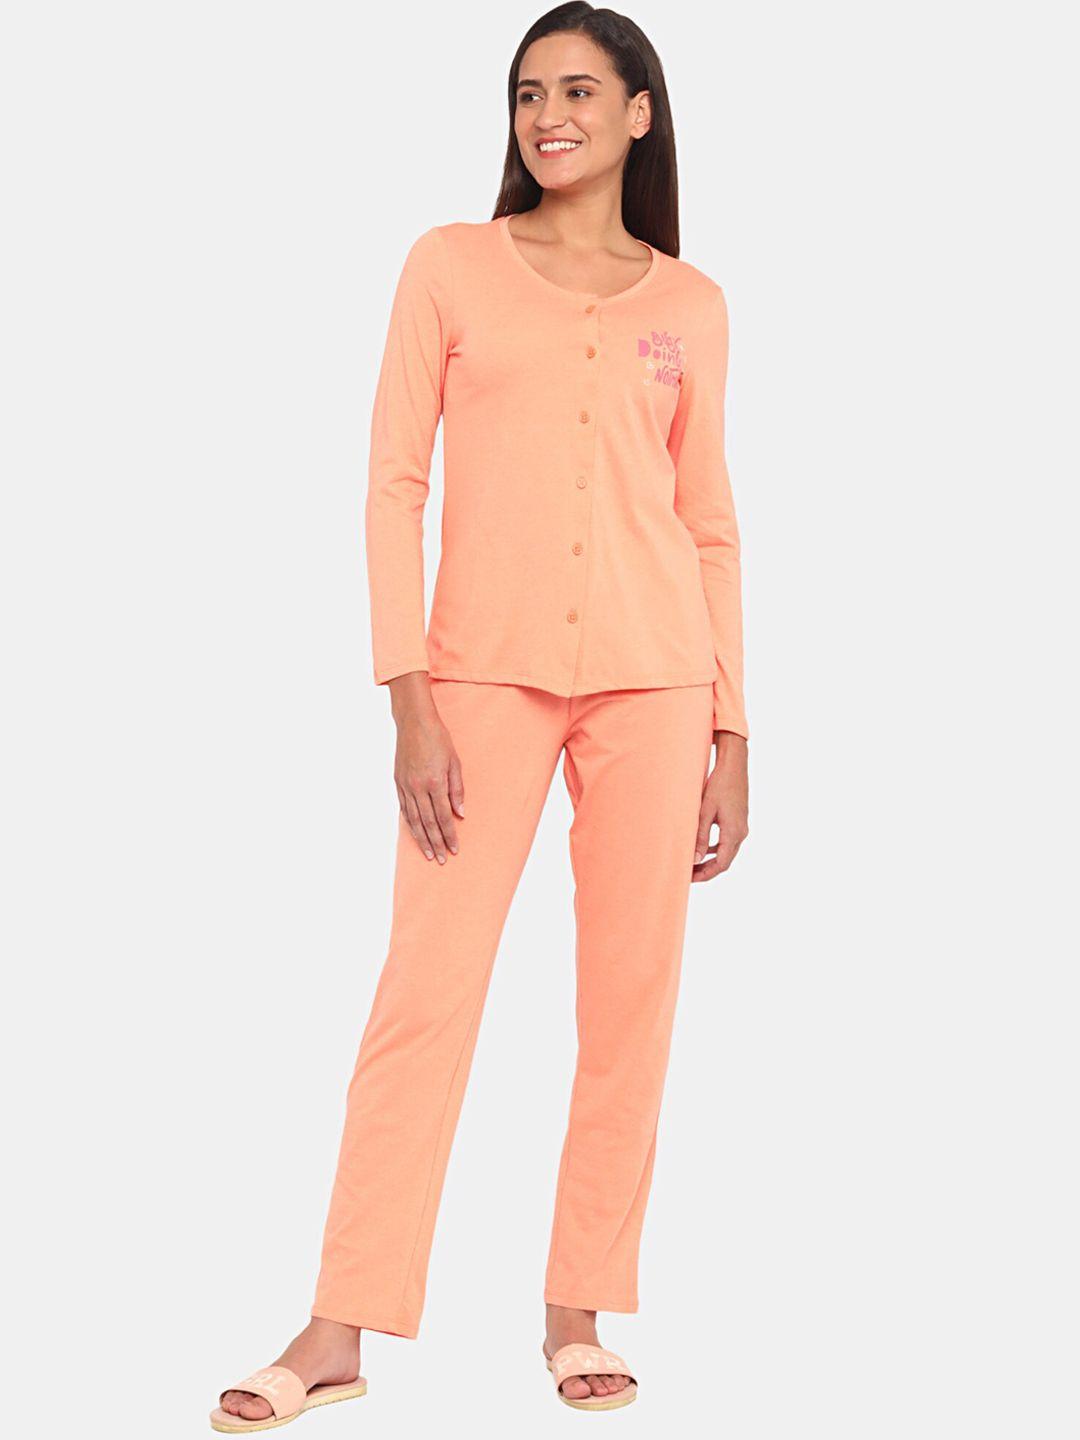 rosaline by zivame women orange night suit